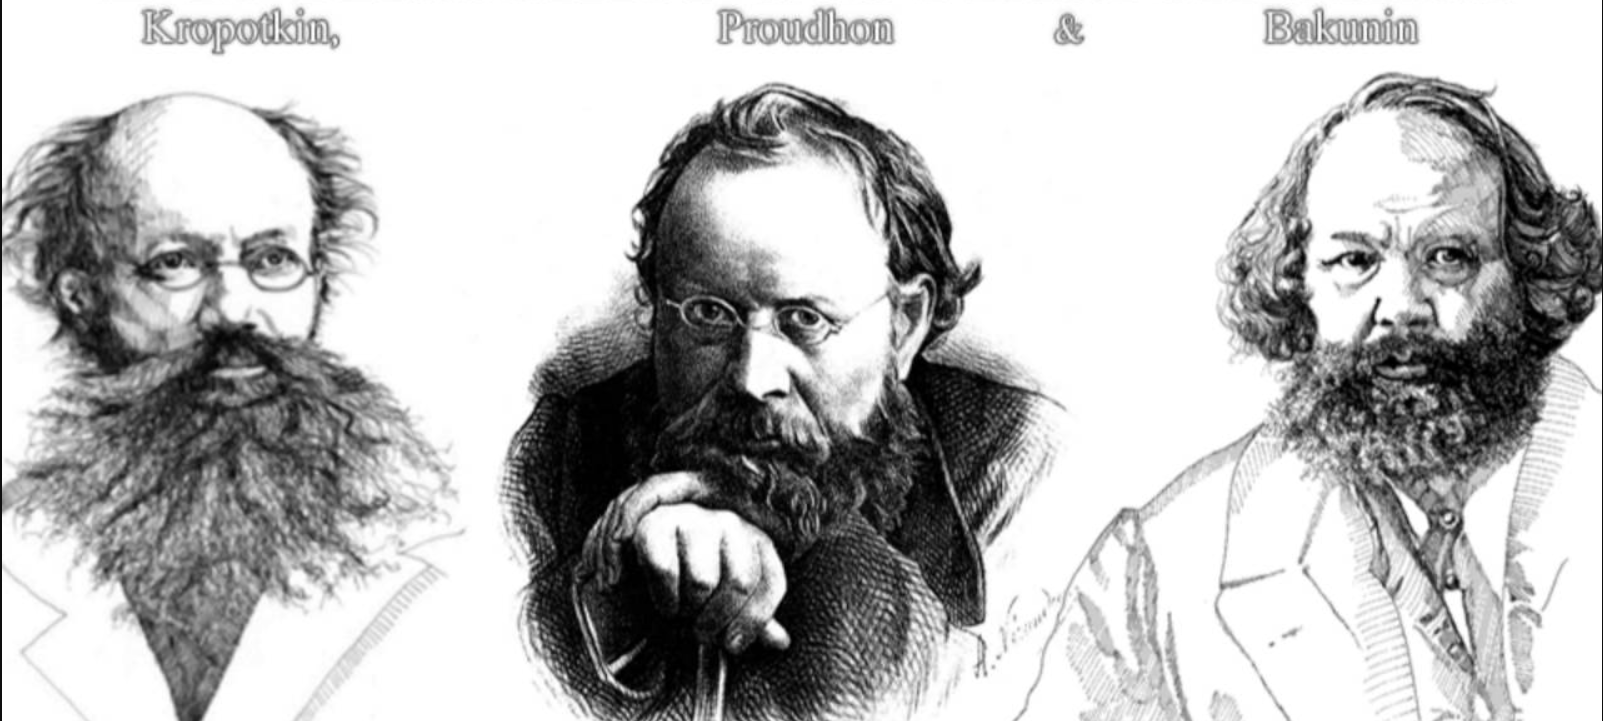 Бакунин Кропоткин Прудон. Бакунин портрет. Бакунин и Маркс. Бакунин против Маркса.